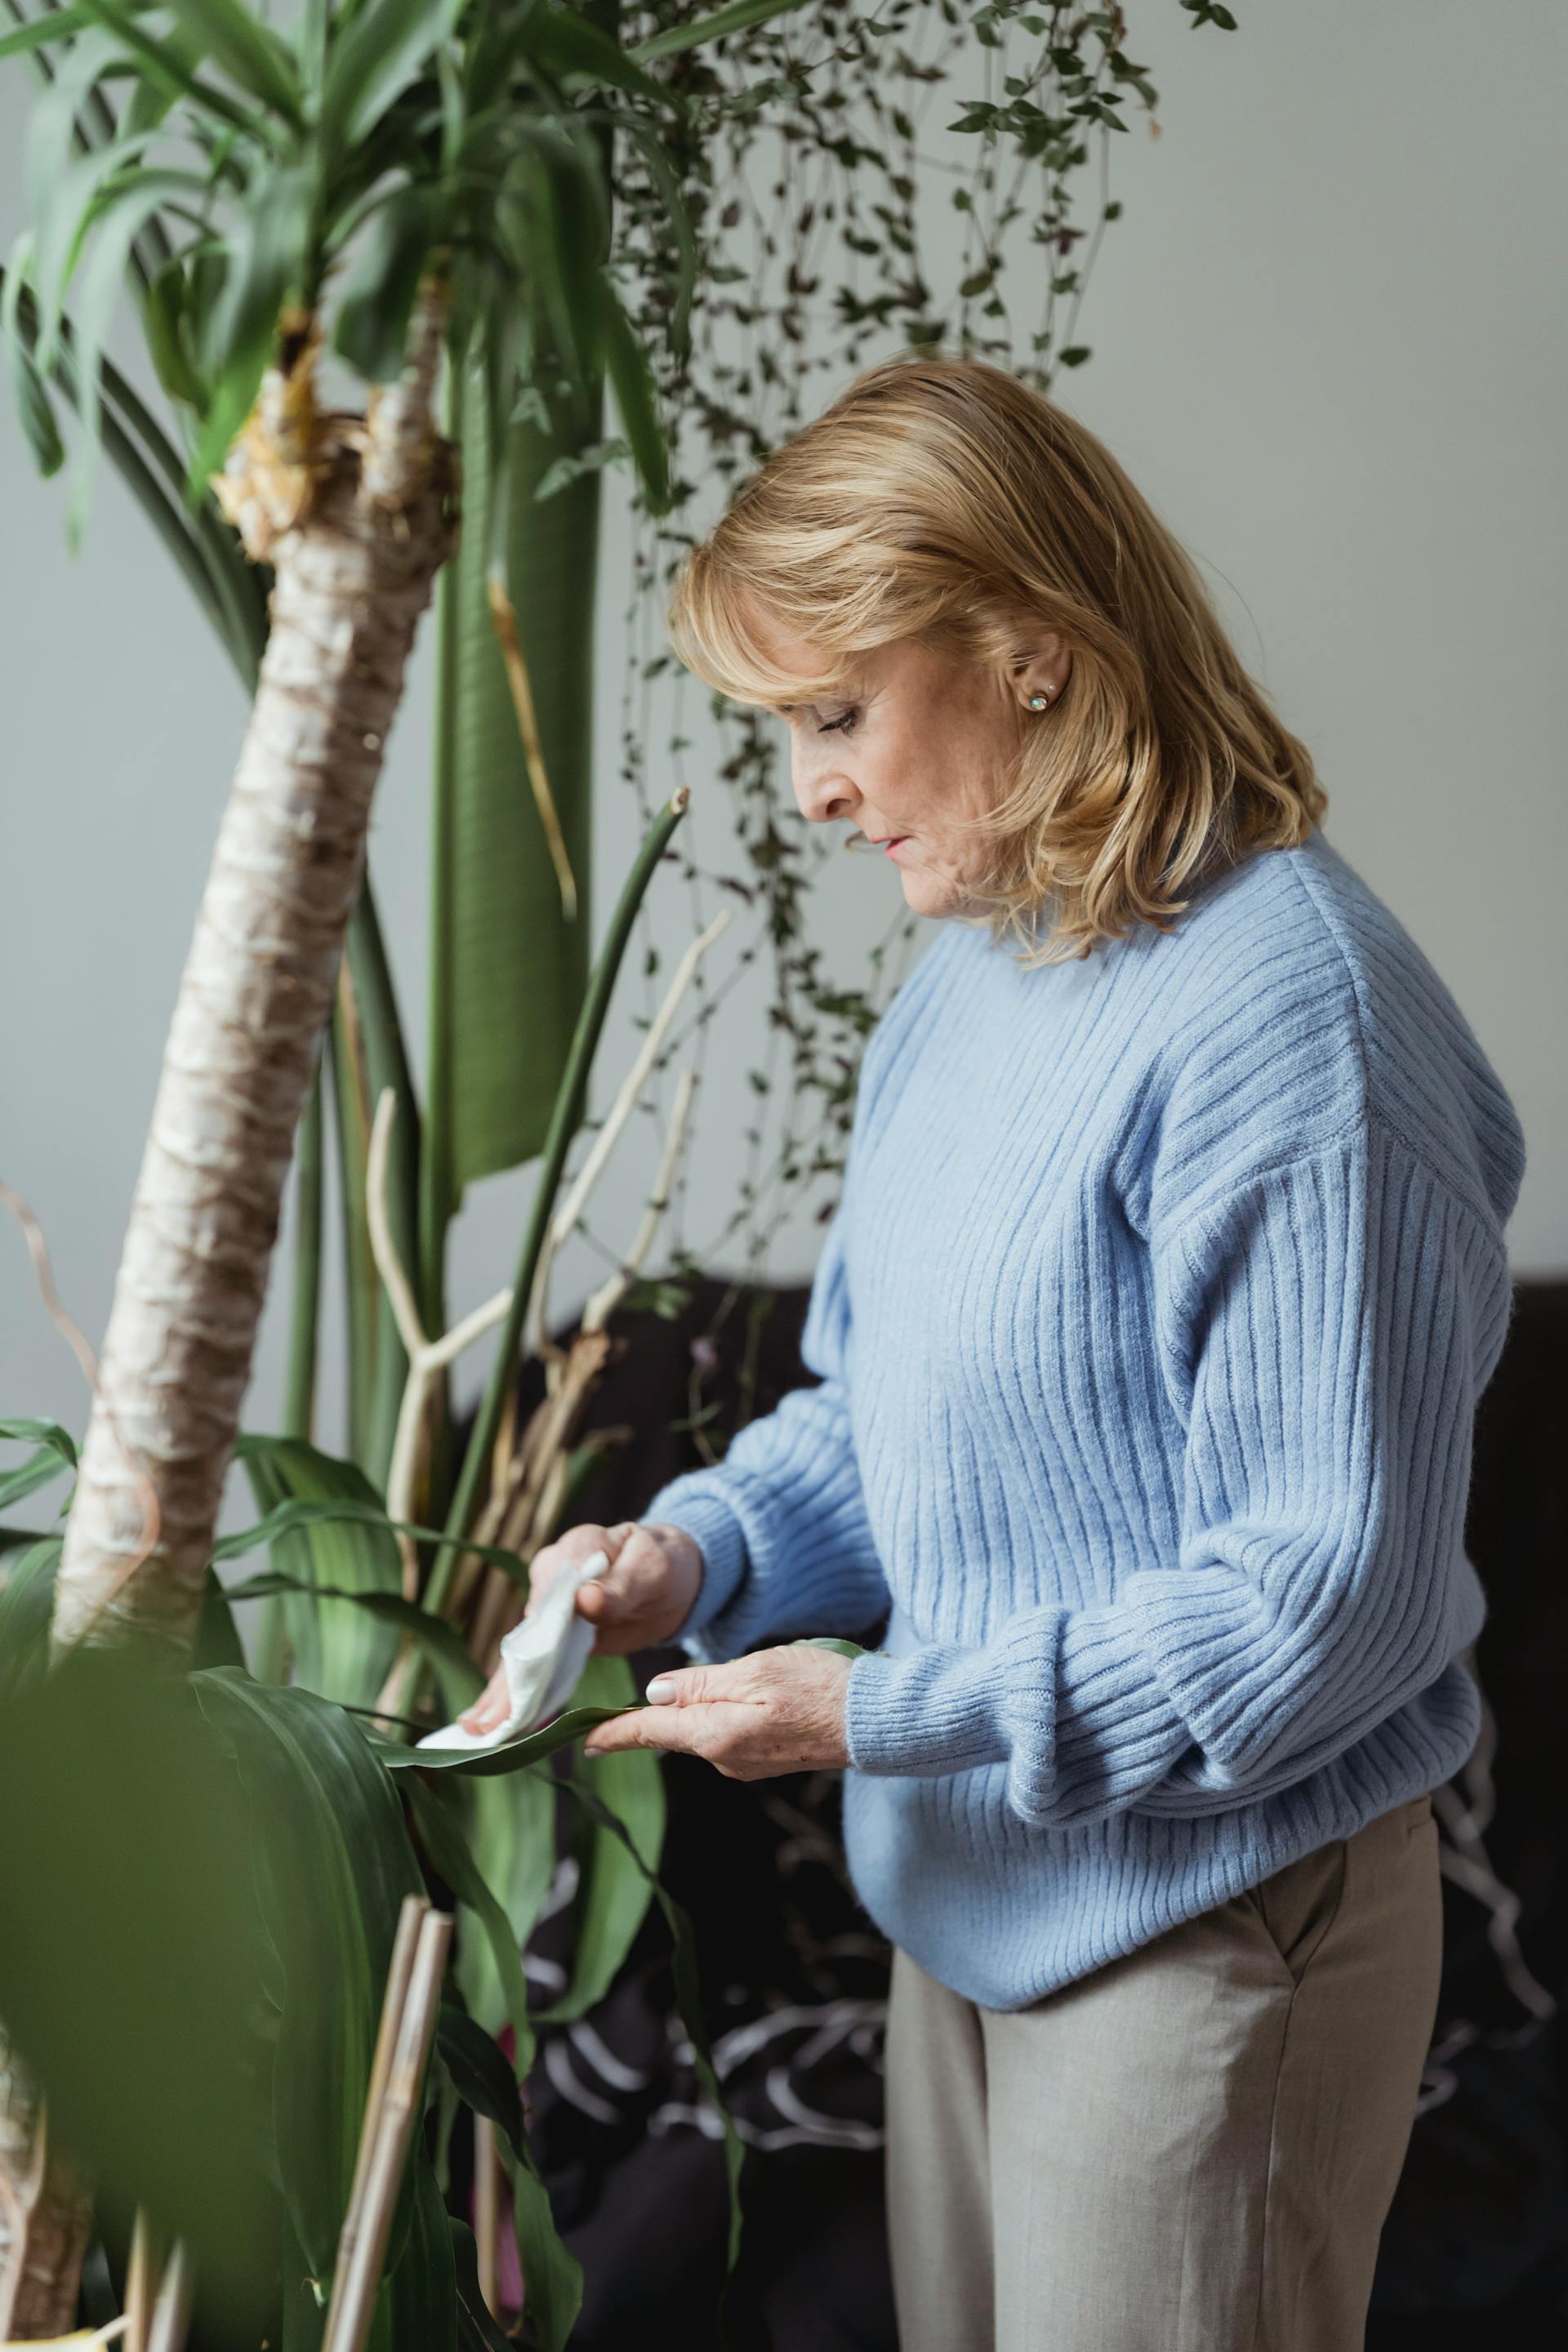 An older woman tending to plants | Source: Pexels